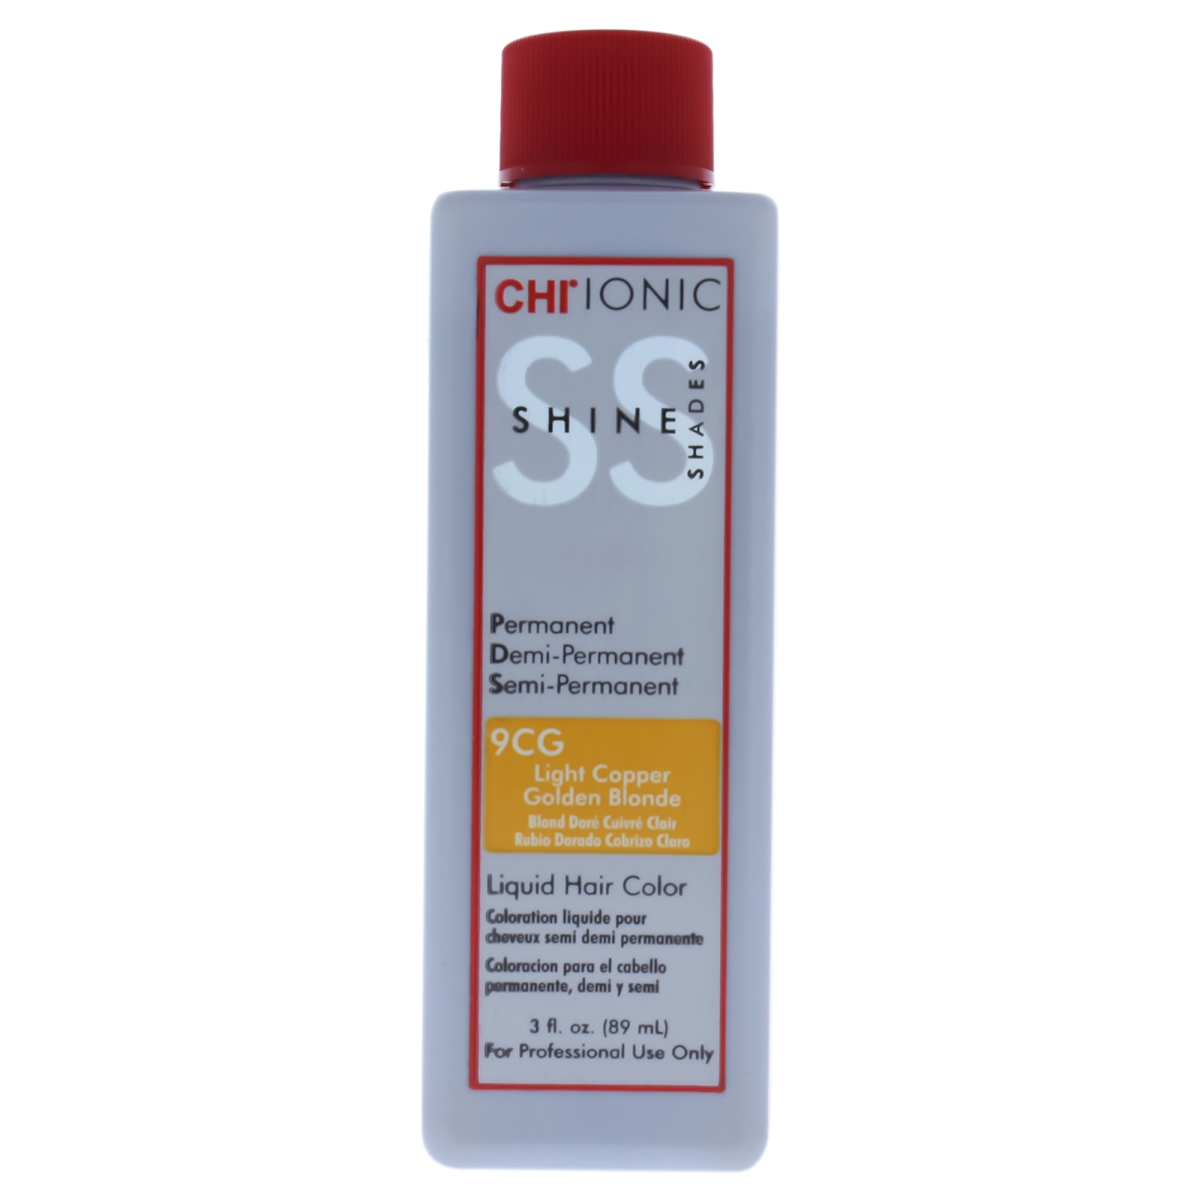 I0084053 Ionic Shine Shades Liquid Hair Color For Unisex - 9cg Light Copper Golden Blonde - 3 Oz